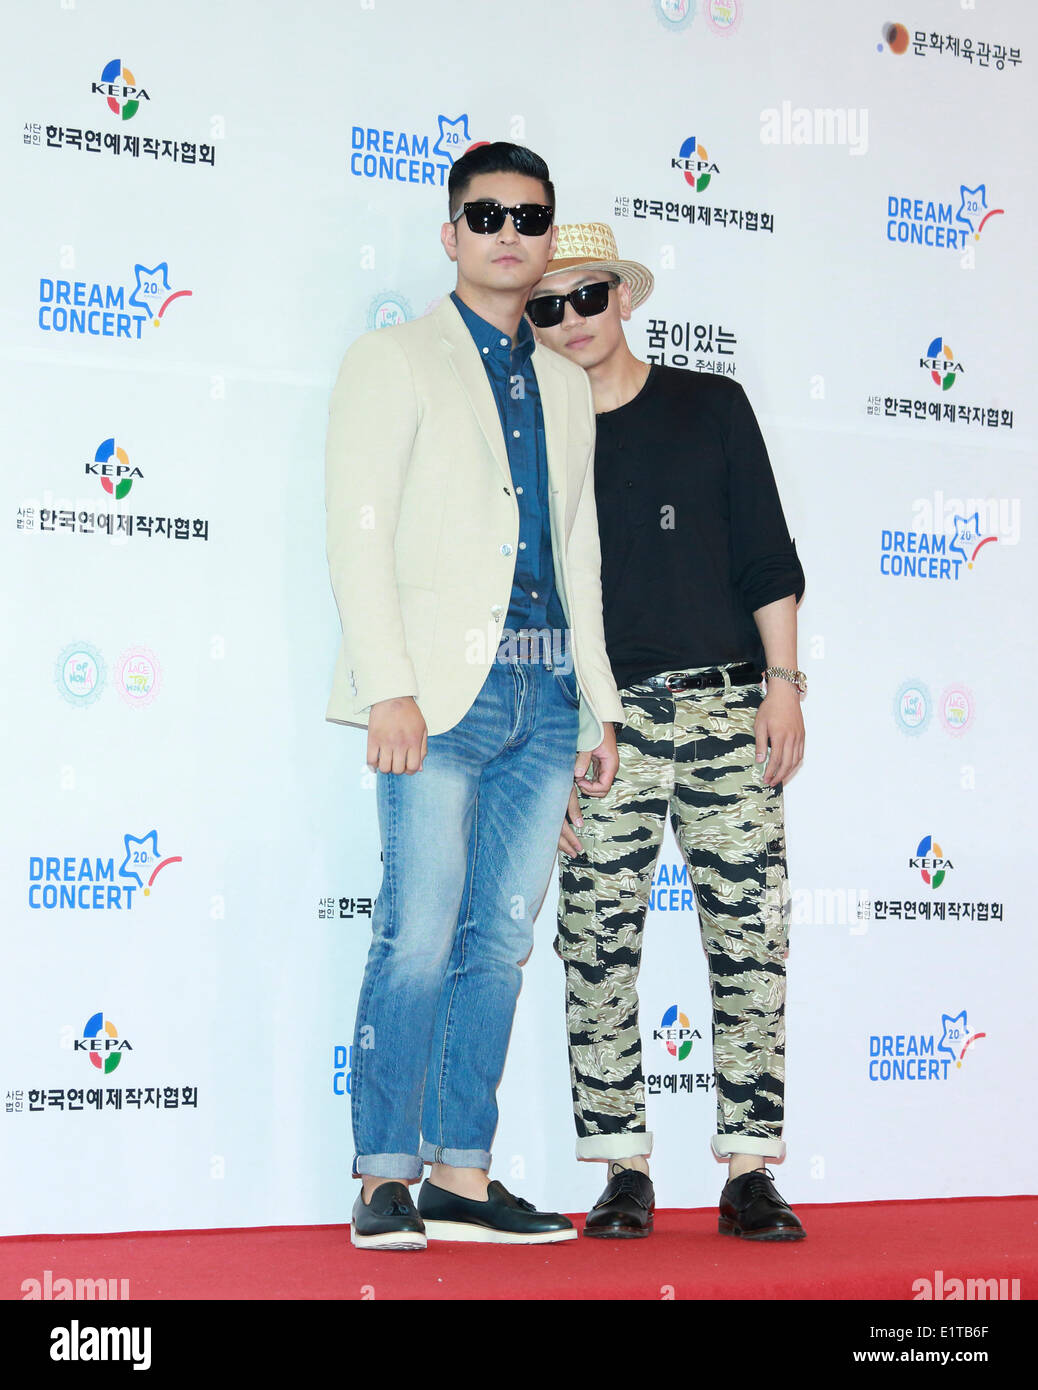 Dynamic Duo, Jun 07, 2014 : K-pop boy band Dynamic Duo pose before the ...